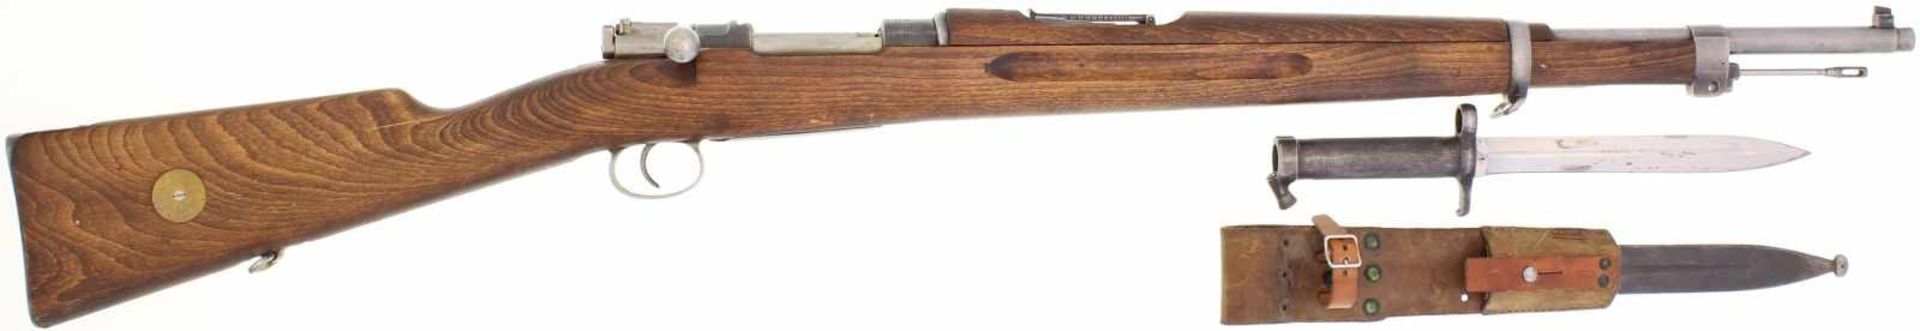 Repetiergewehr, Carl Gustav m/96, hergestellt 1899 Kal. 6.5x55mm@ LL 600mm, TL 1120mm,